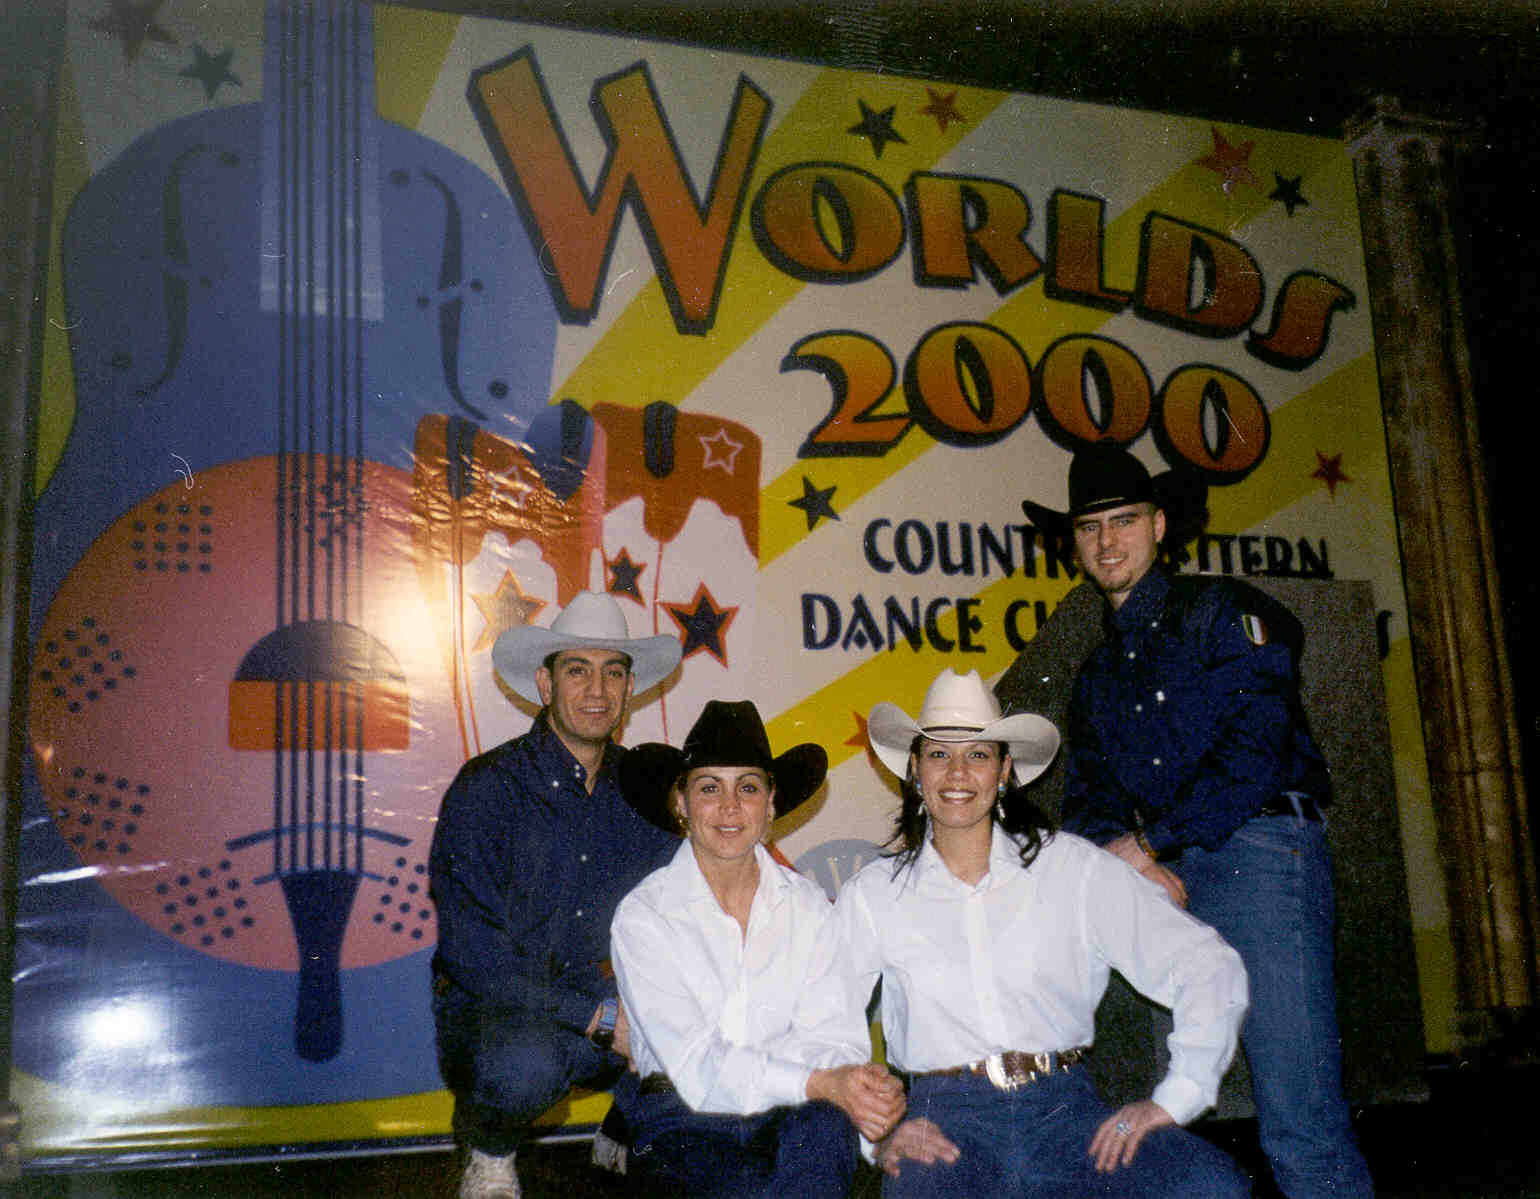 Nashville World 2000